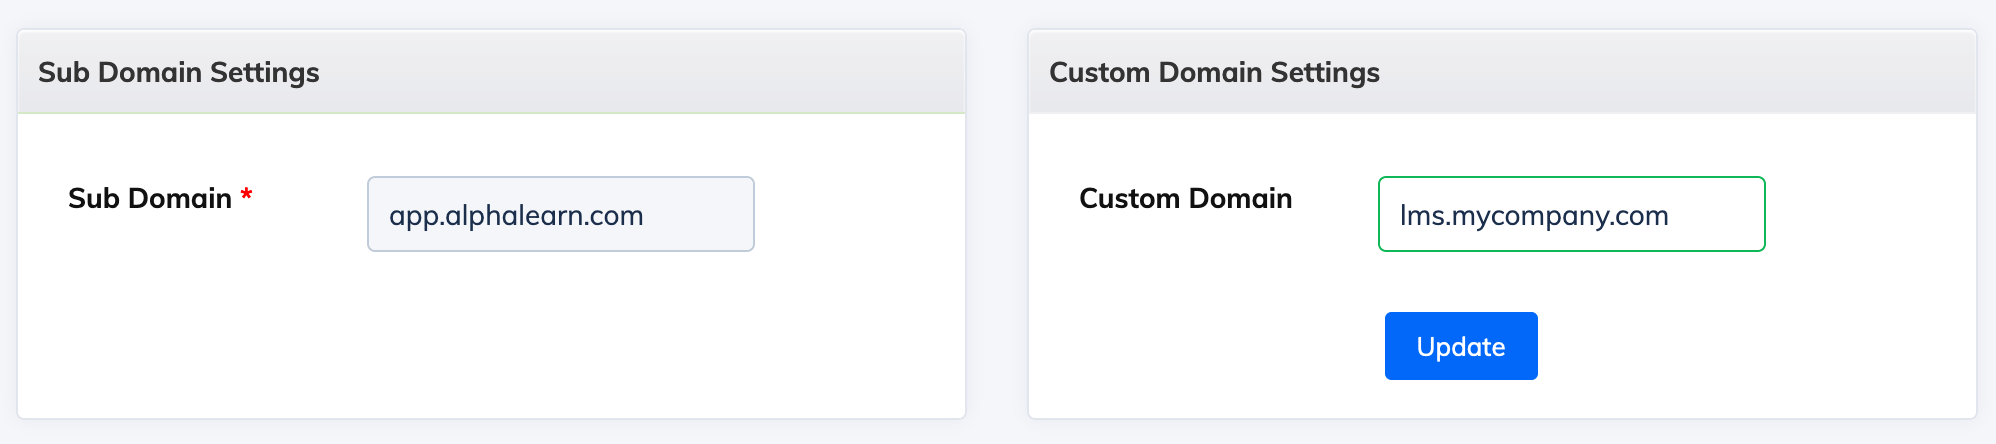 accessing-lms-using-a-custom-domain